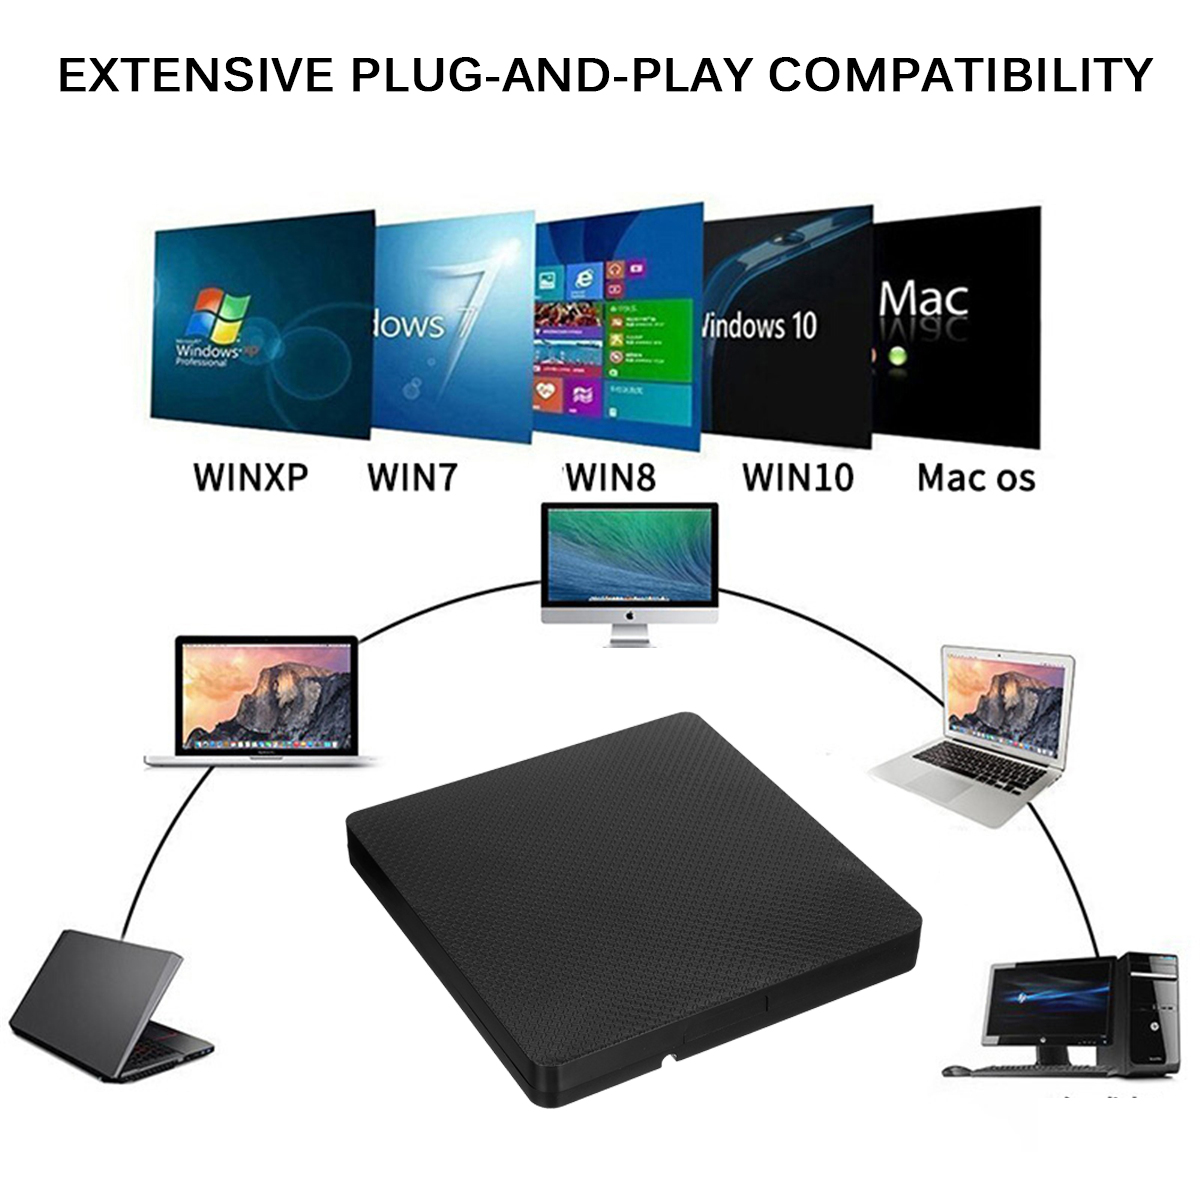 USB 3.0 Type-C External Optical Drive DVD-RW Player CD DVD Burner Writer Rewriter Data Transfer for PC Laptop OS Windows 7/8/10